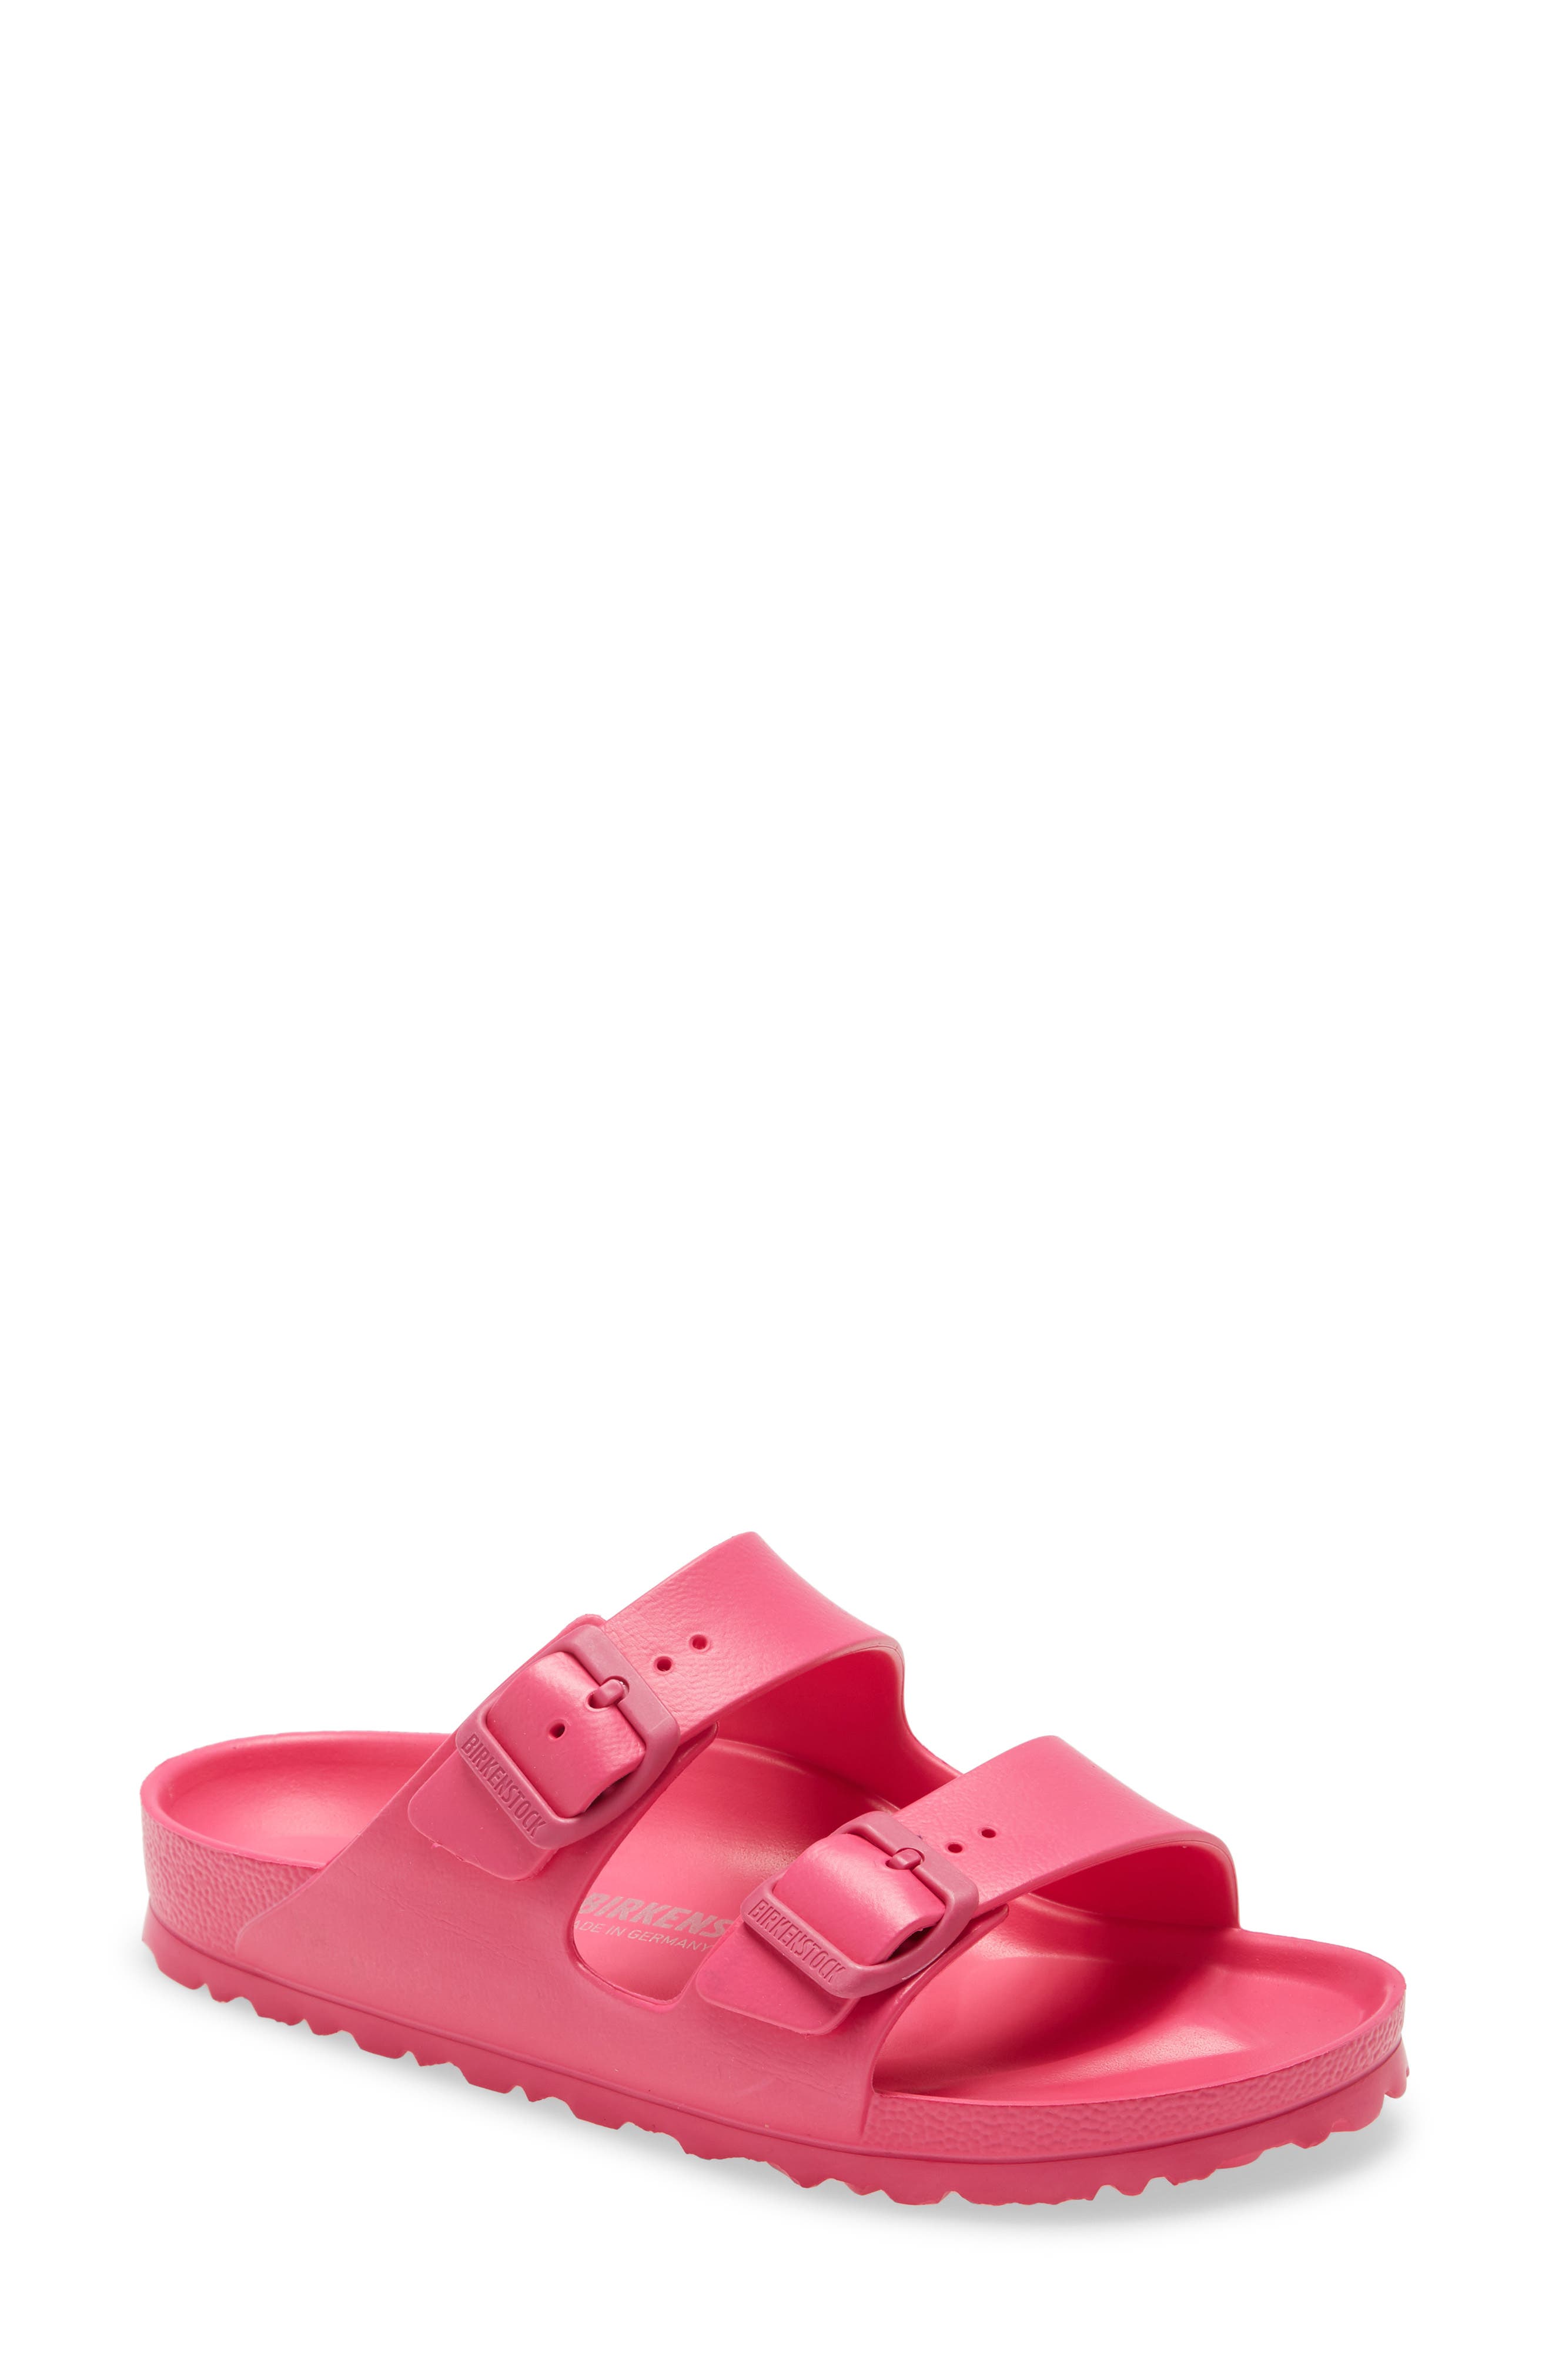 light pink waterproof birkenstocks